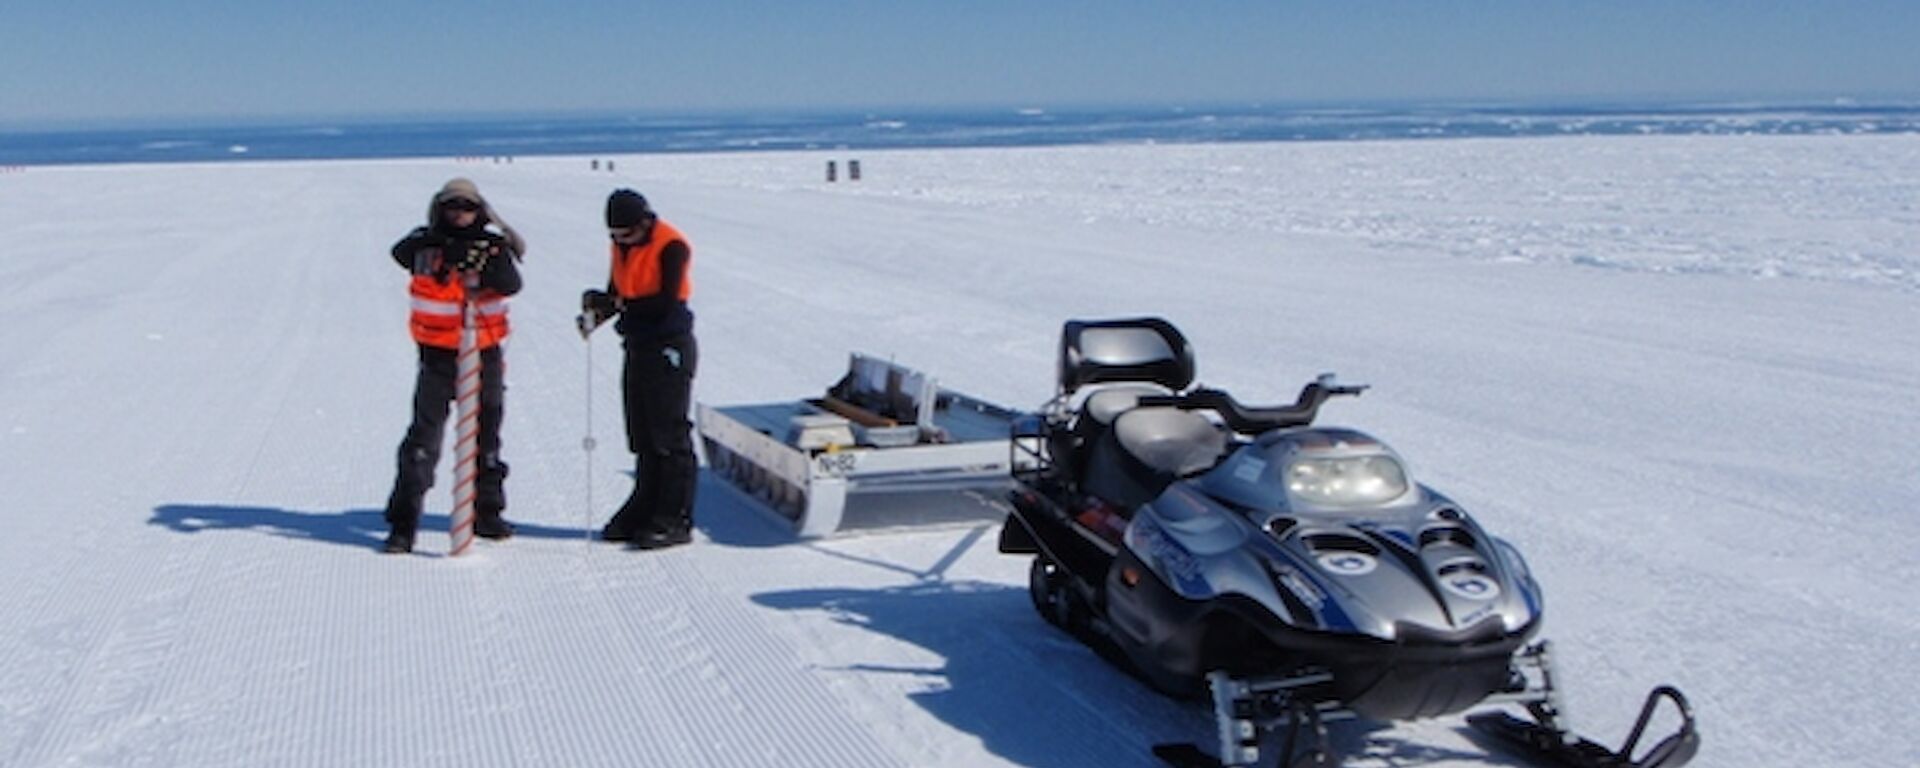 Surface density testing at the Casey Ski Landing Area (CSLA)